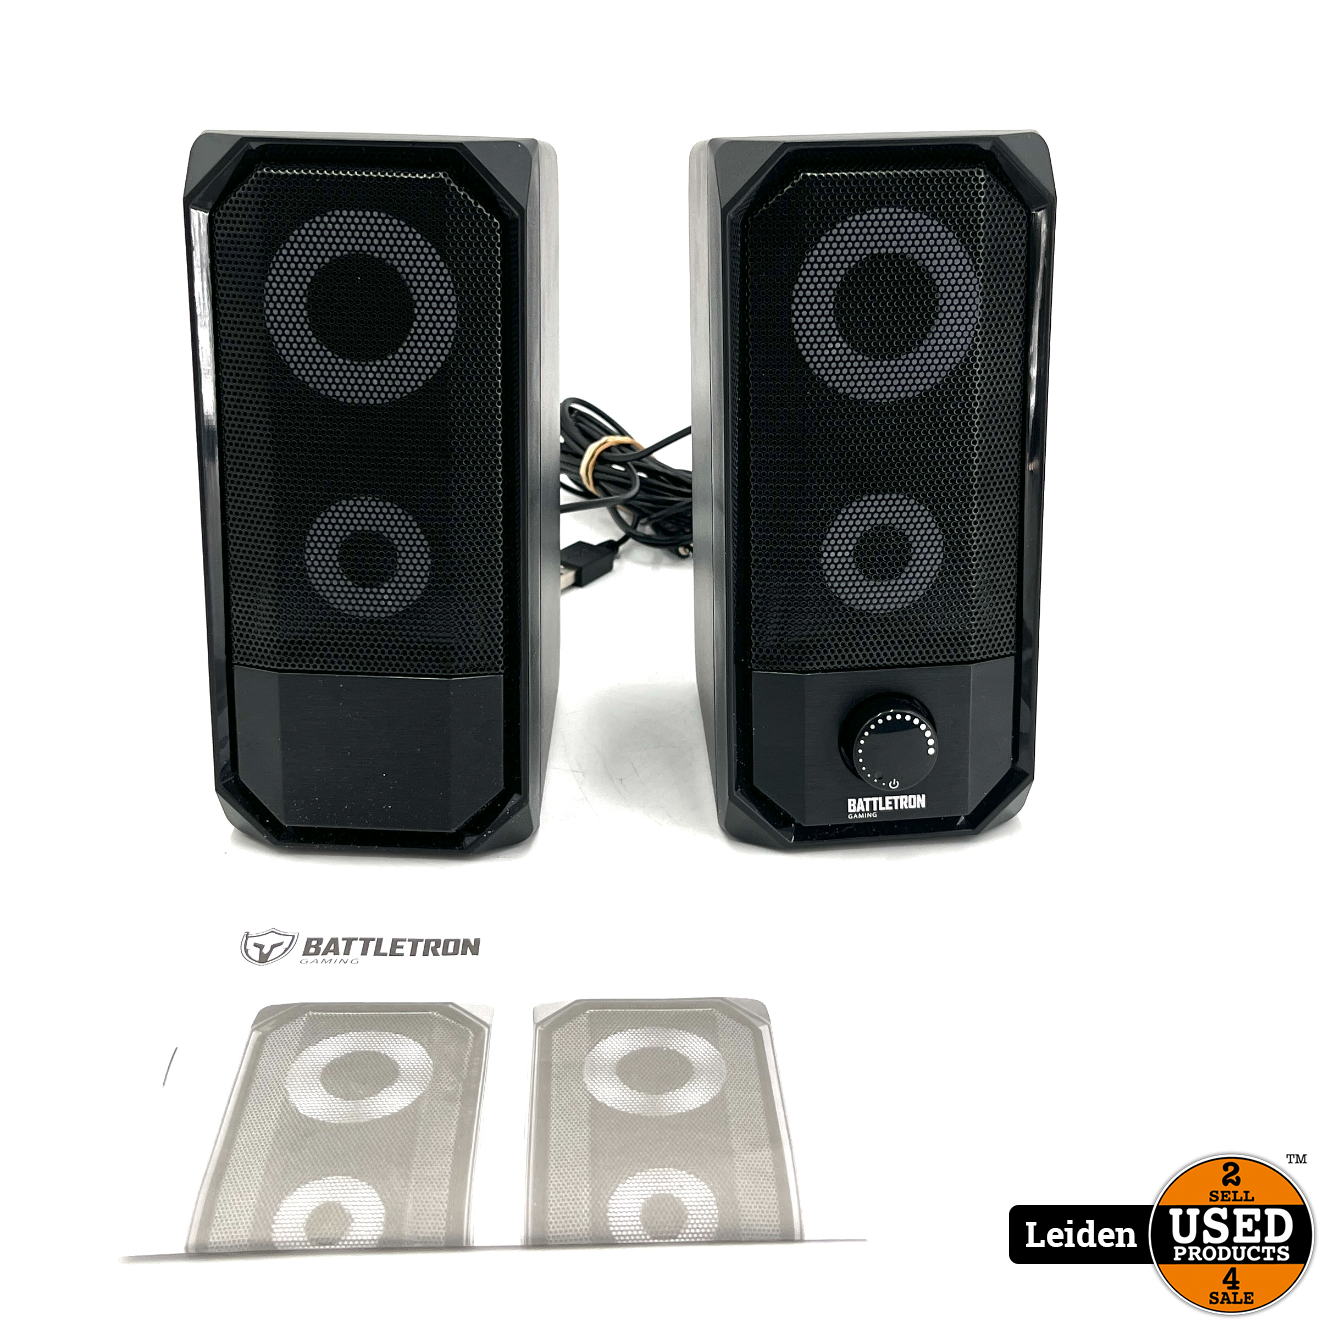 Battletron - gaming speakers - met verlichting - Jack,USB 10 x 8 17 cm - Products Leiden